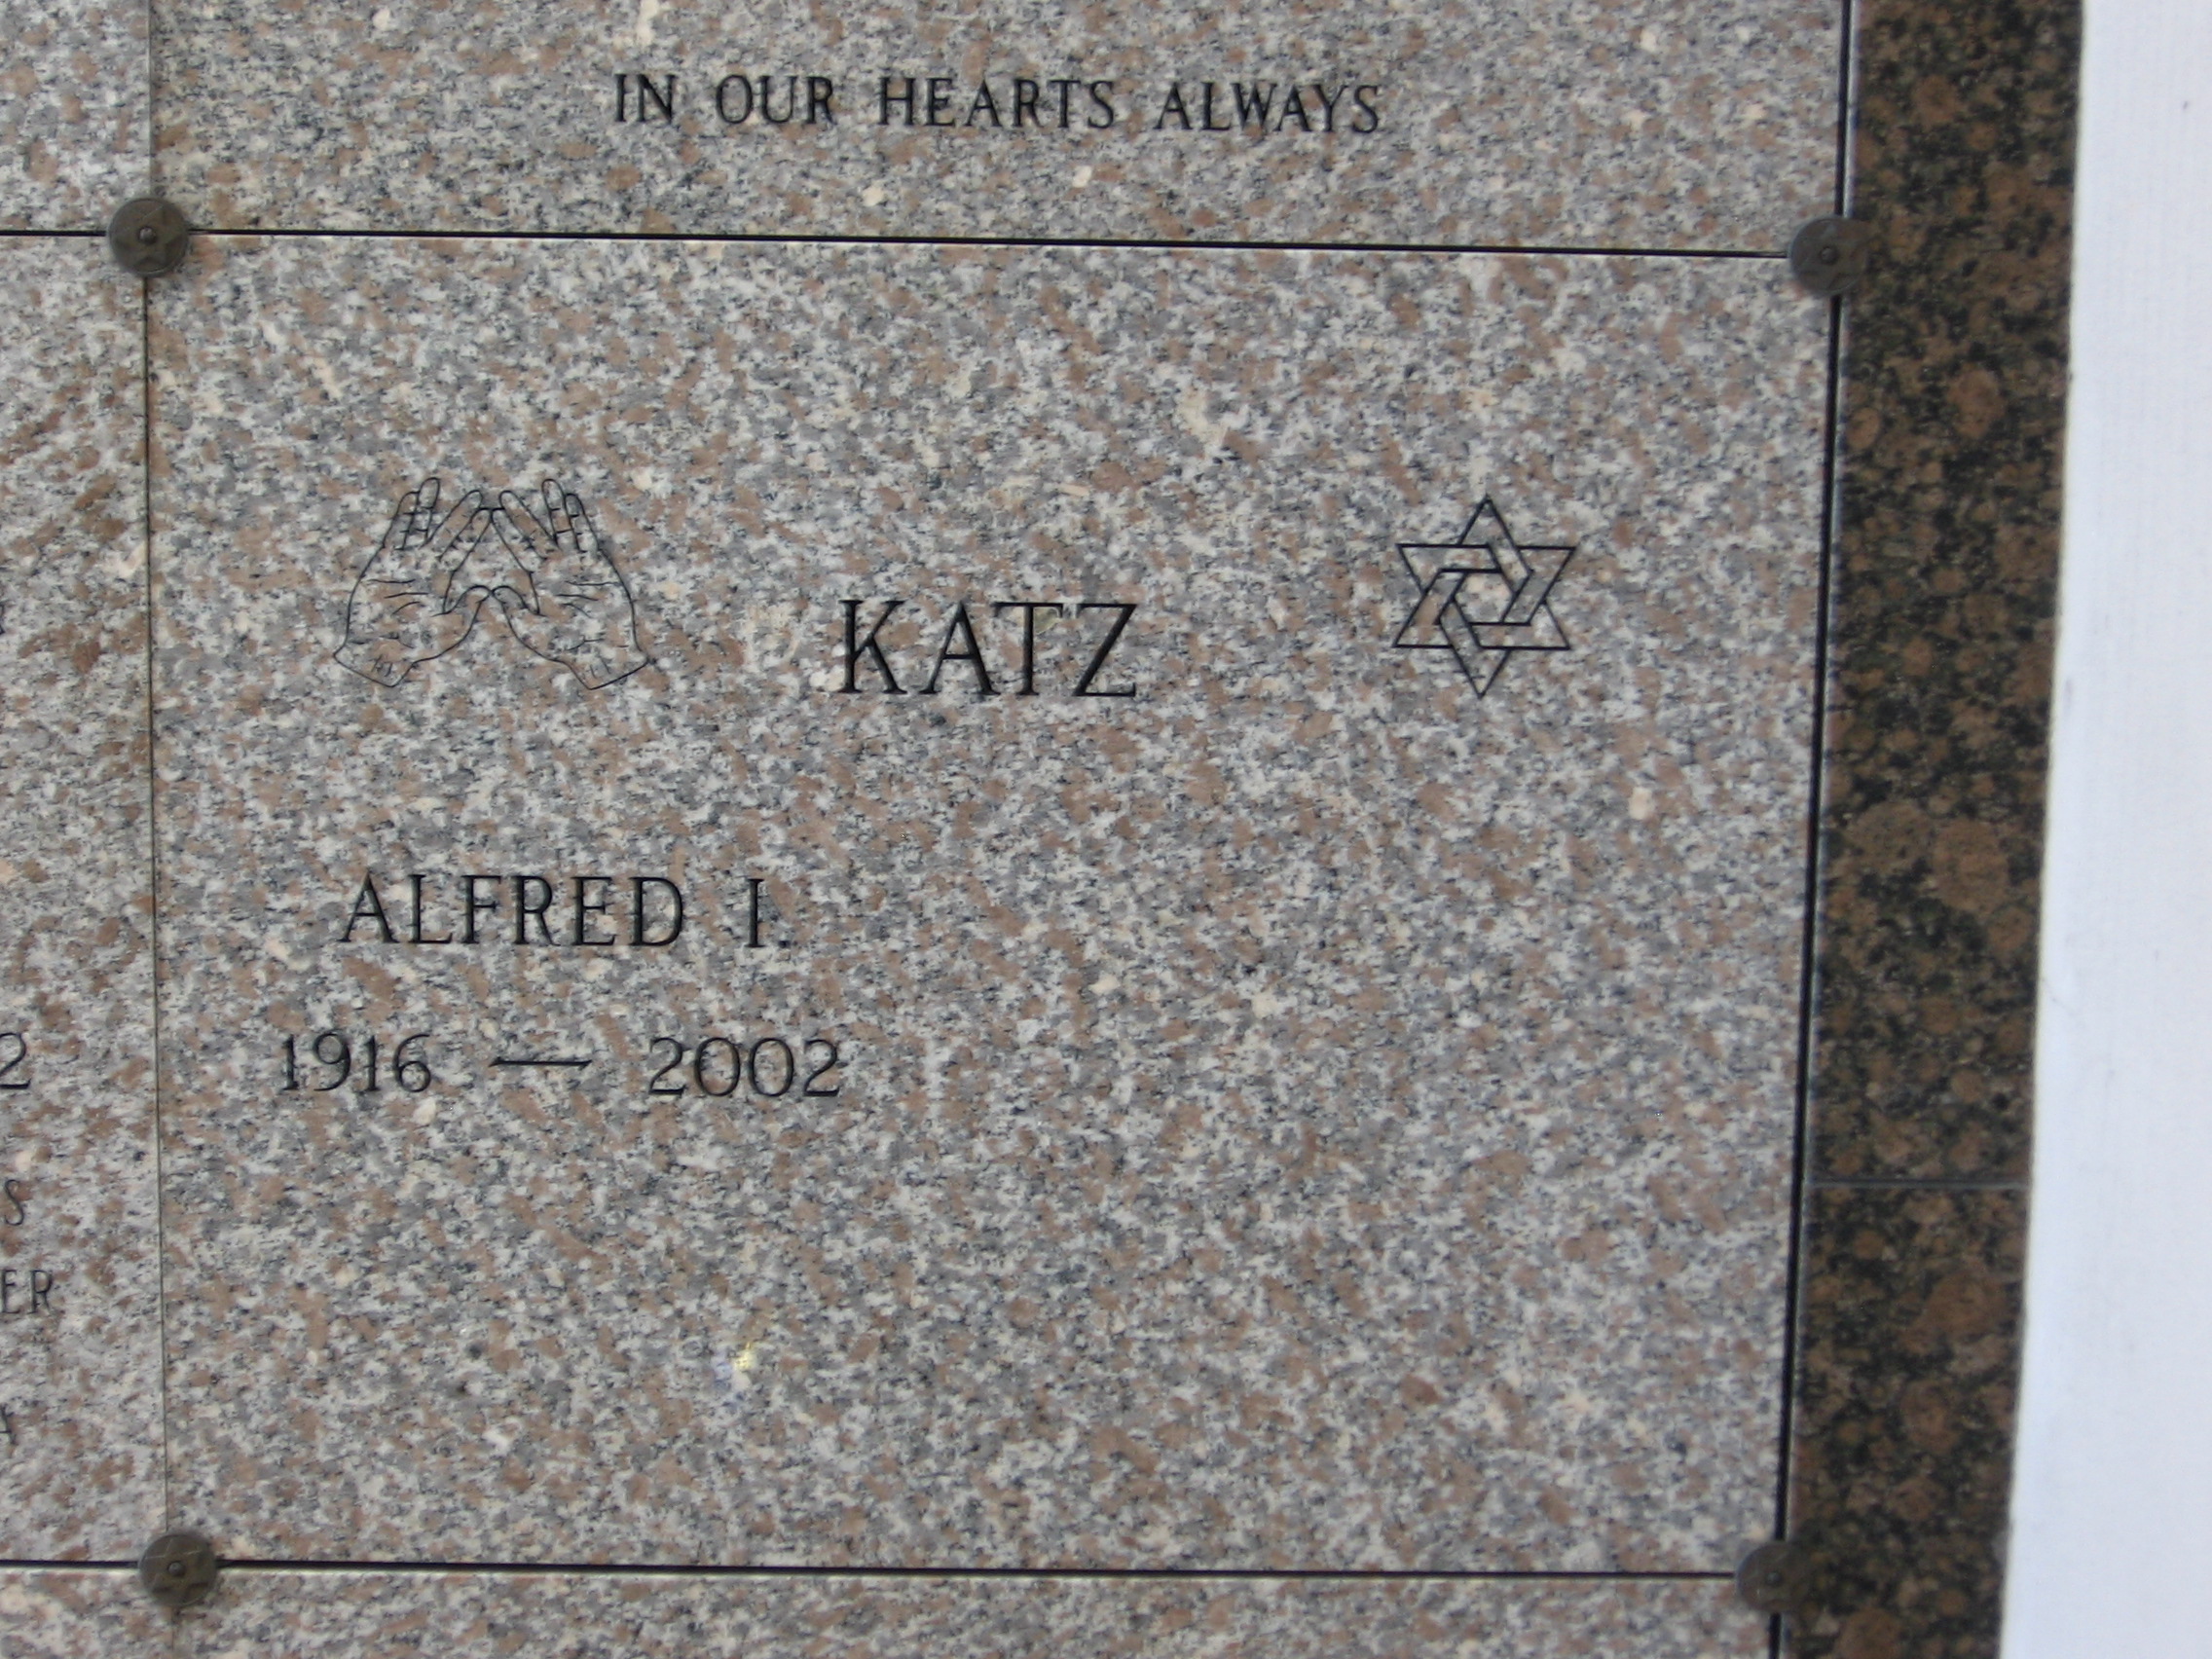 Alfred I Katz